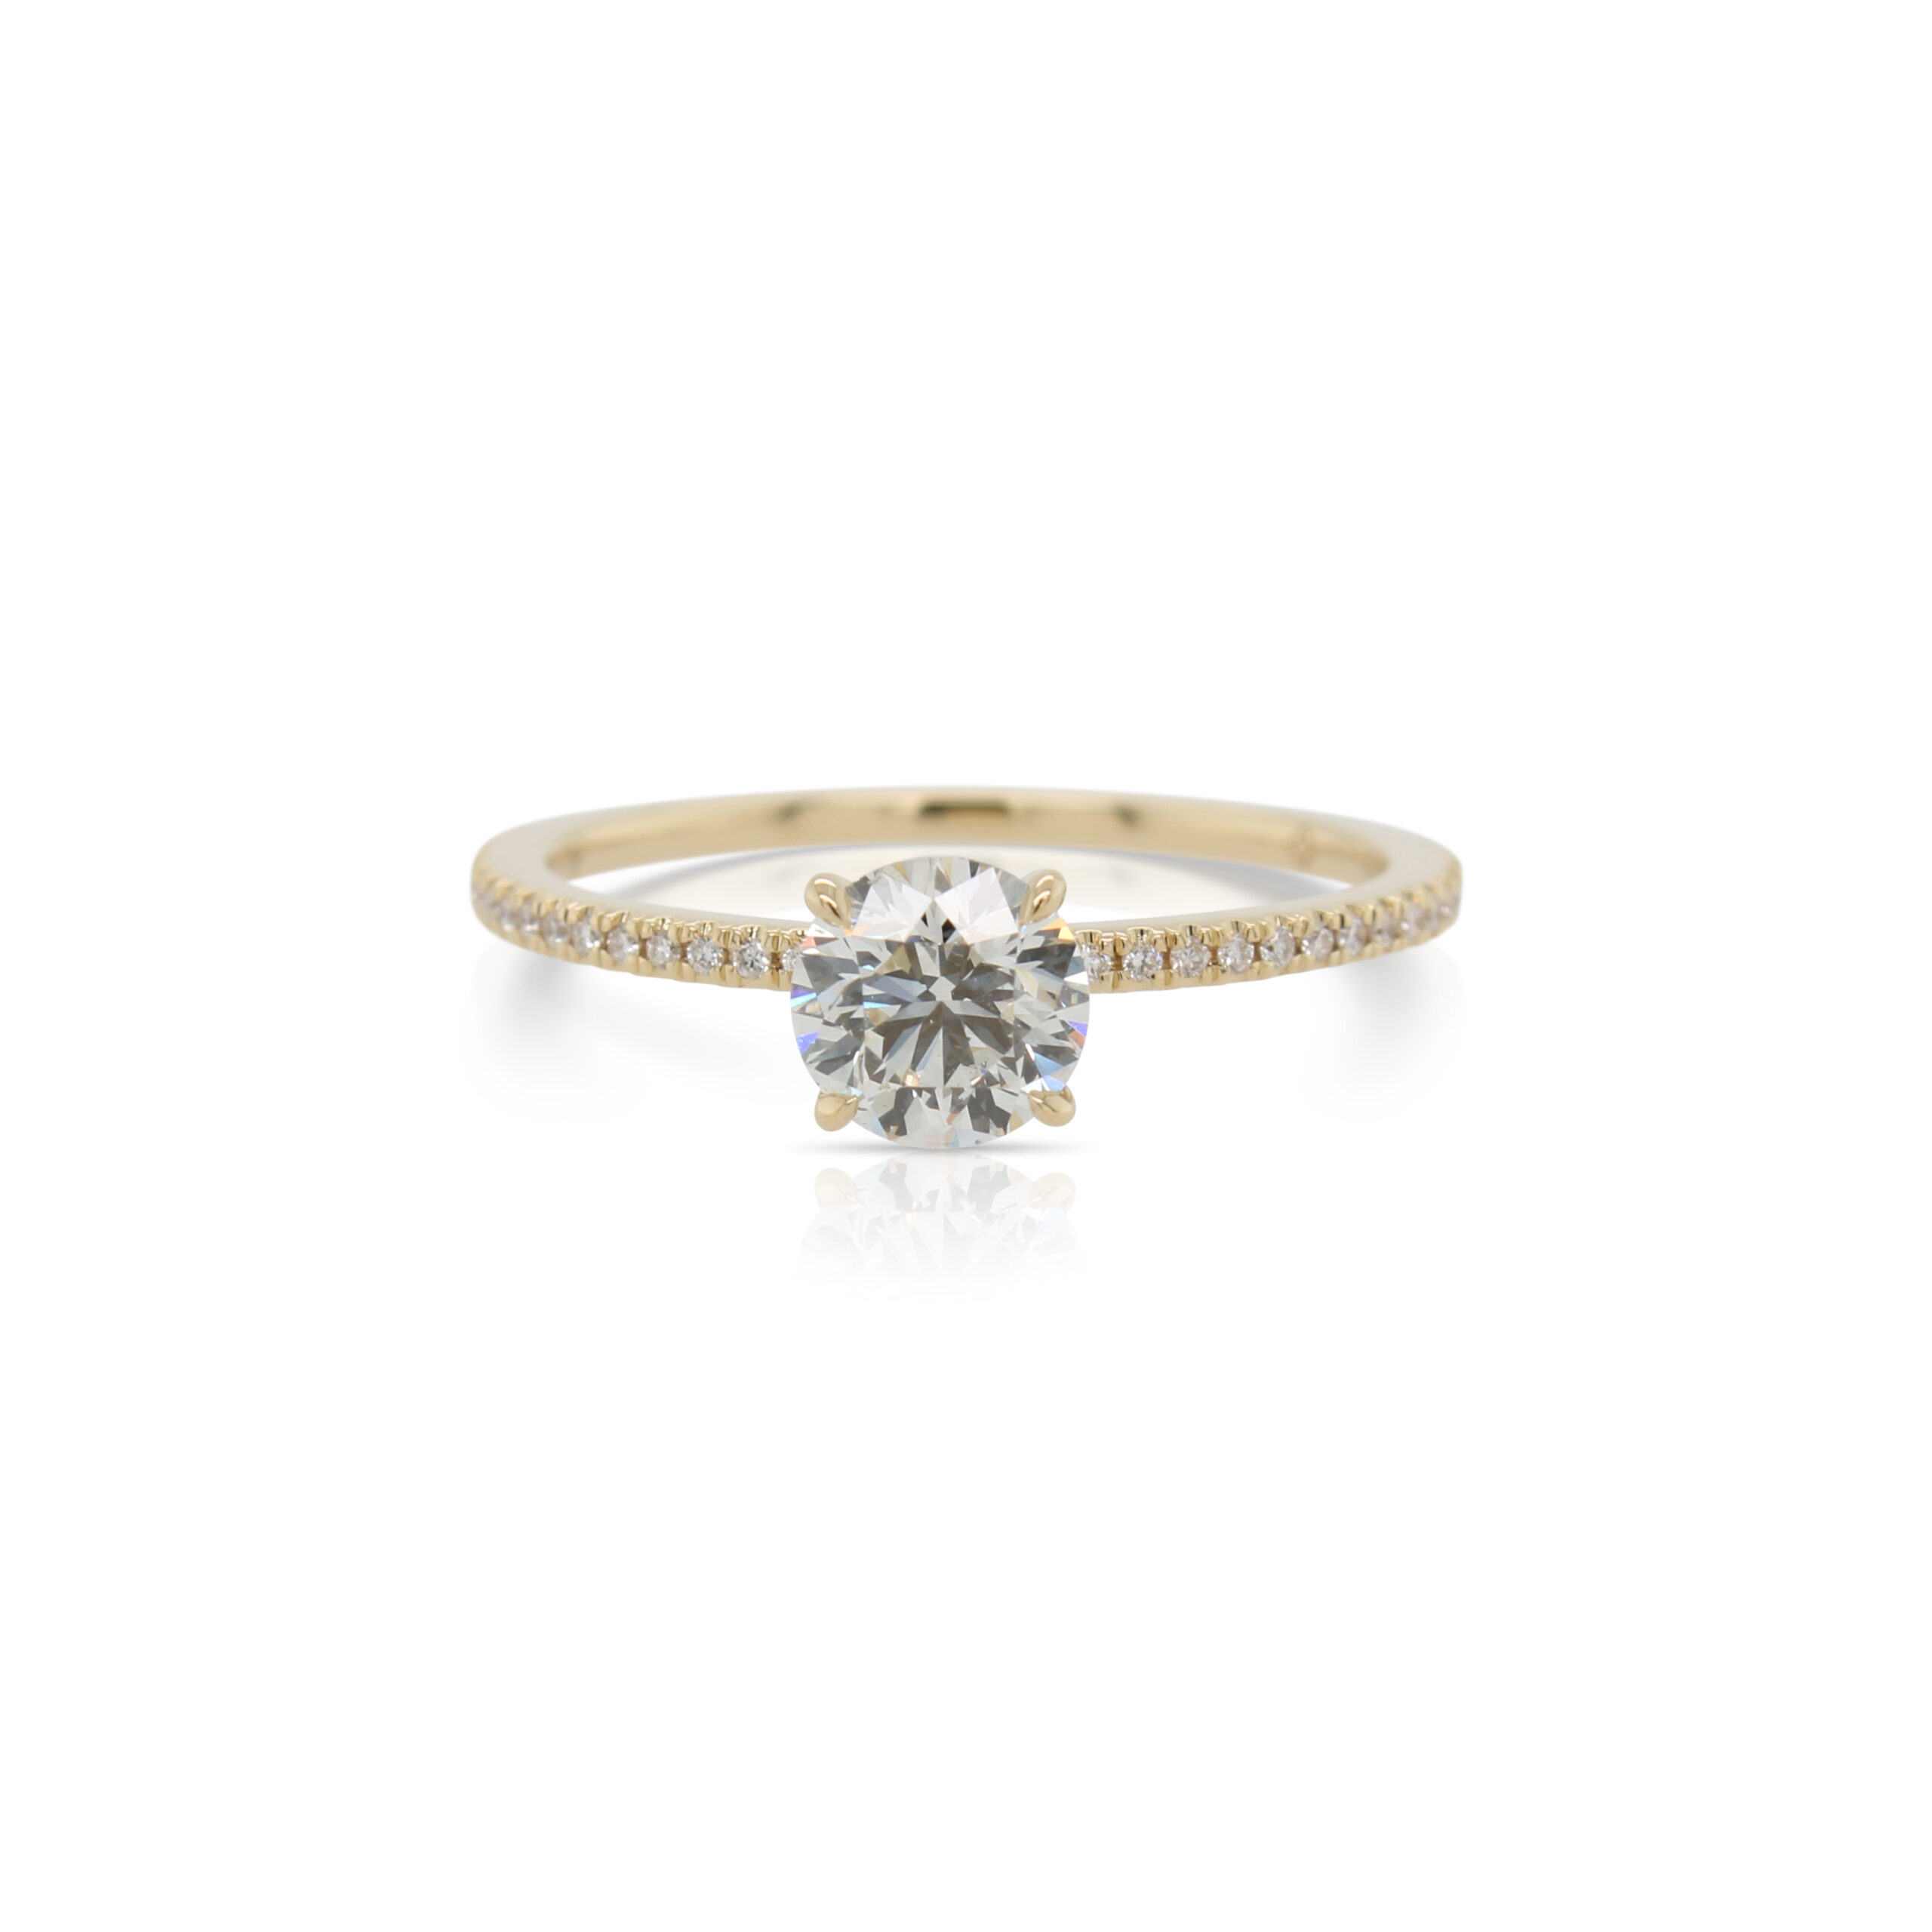 021663Diamond-Engagement-Ring.jpg